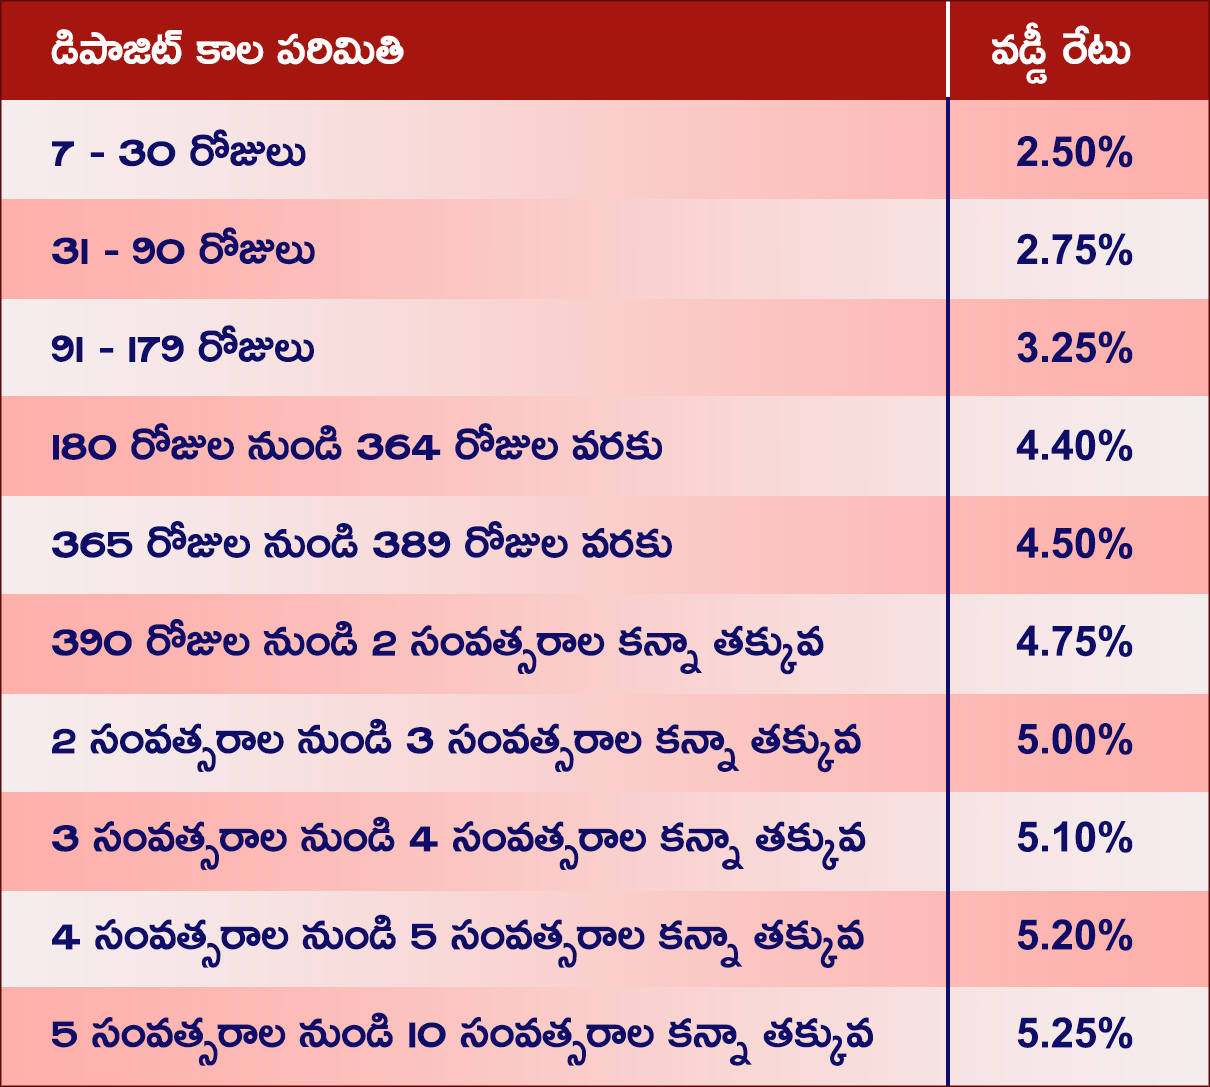 Kotak Mahindra FD Interest Rates